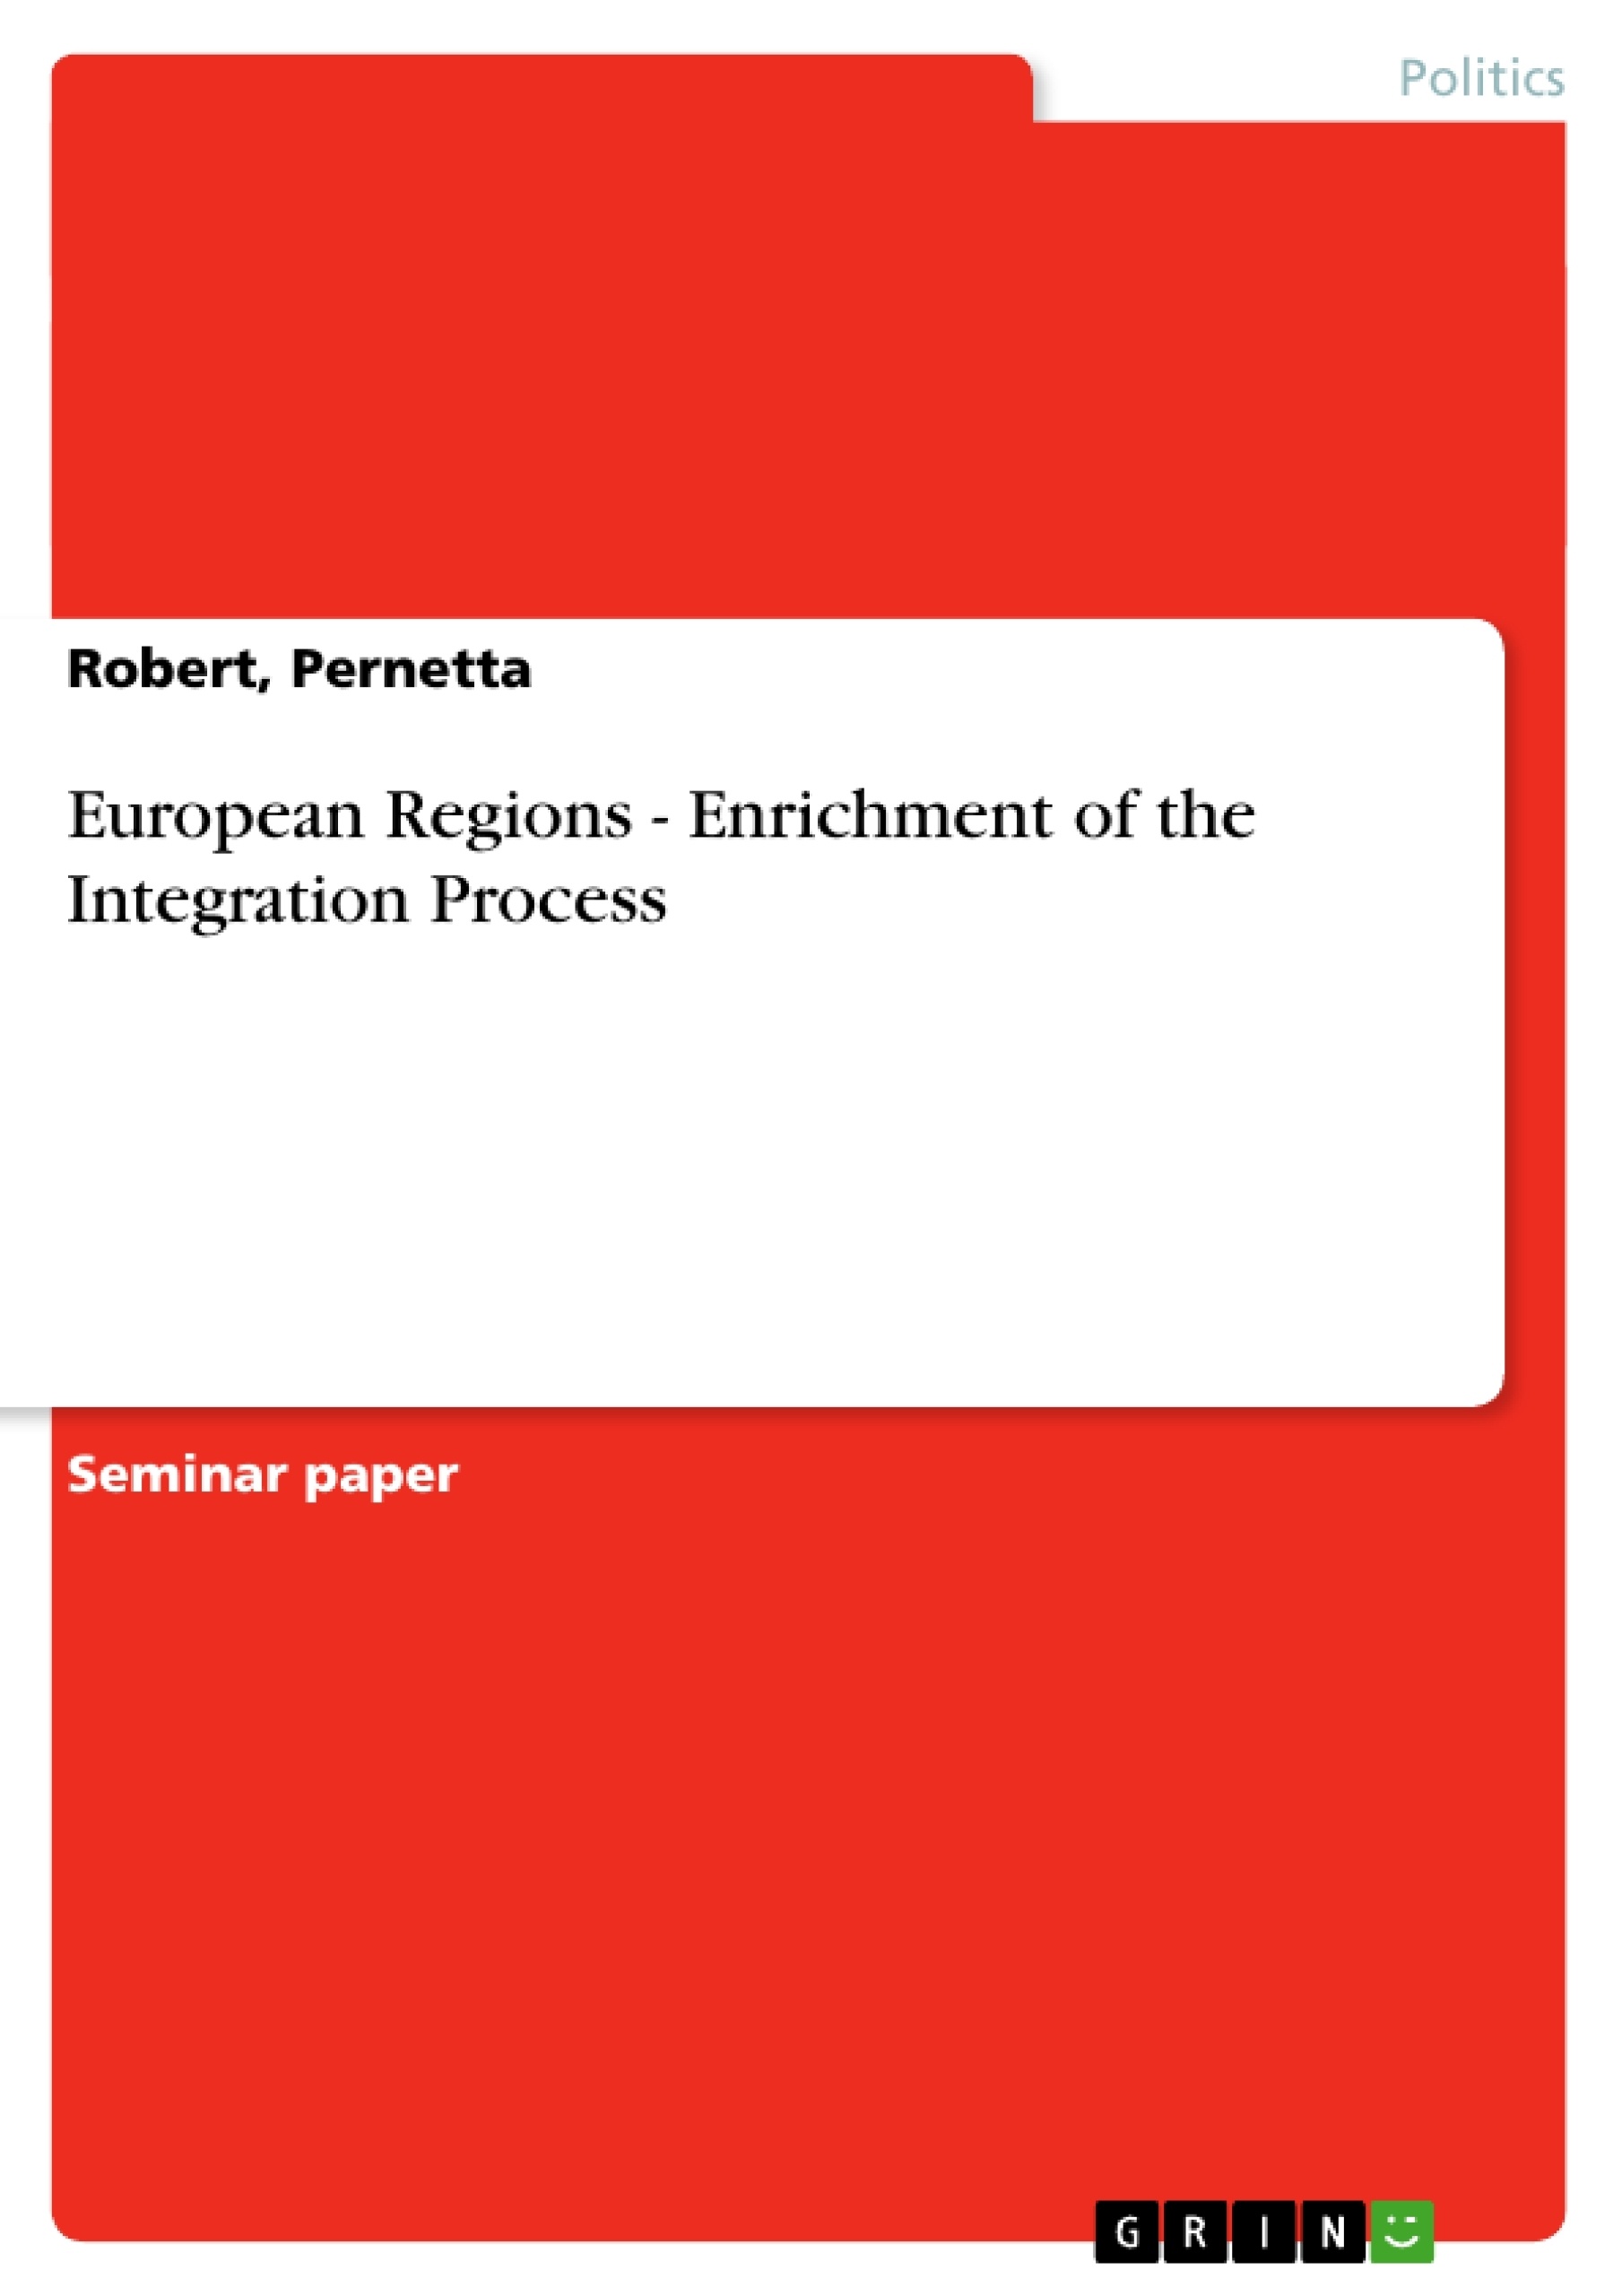 Title: European Regions - Enrichment of the Integration Process